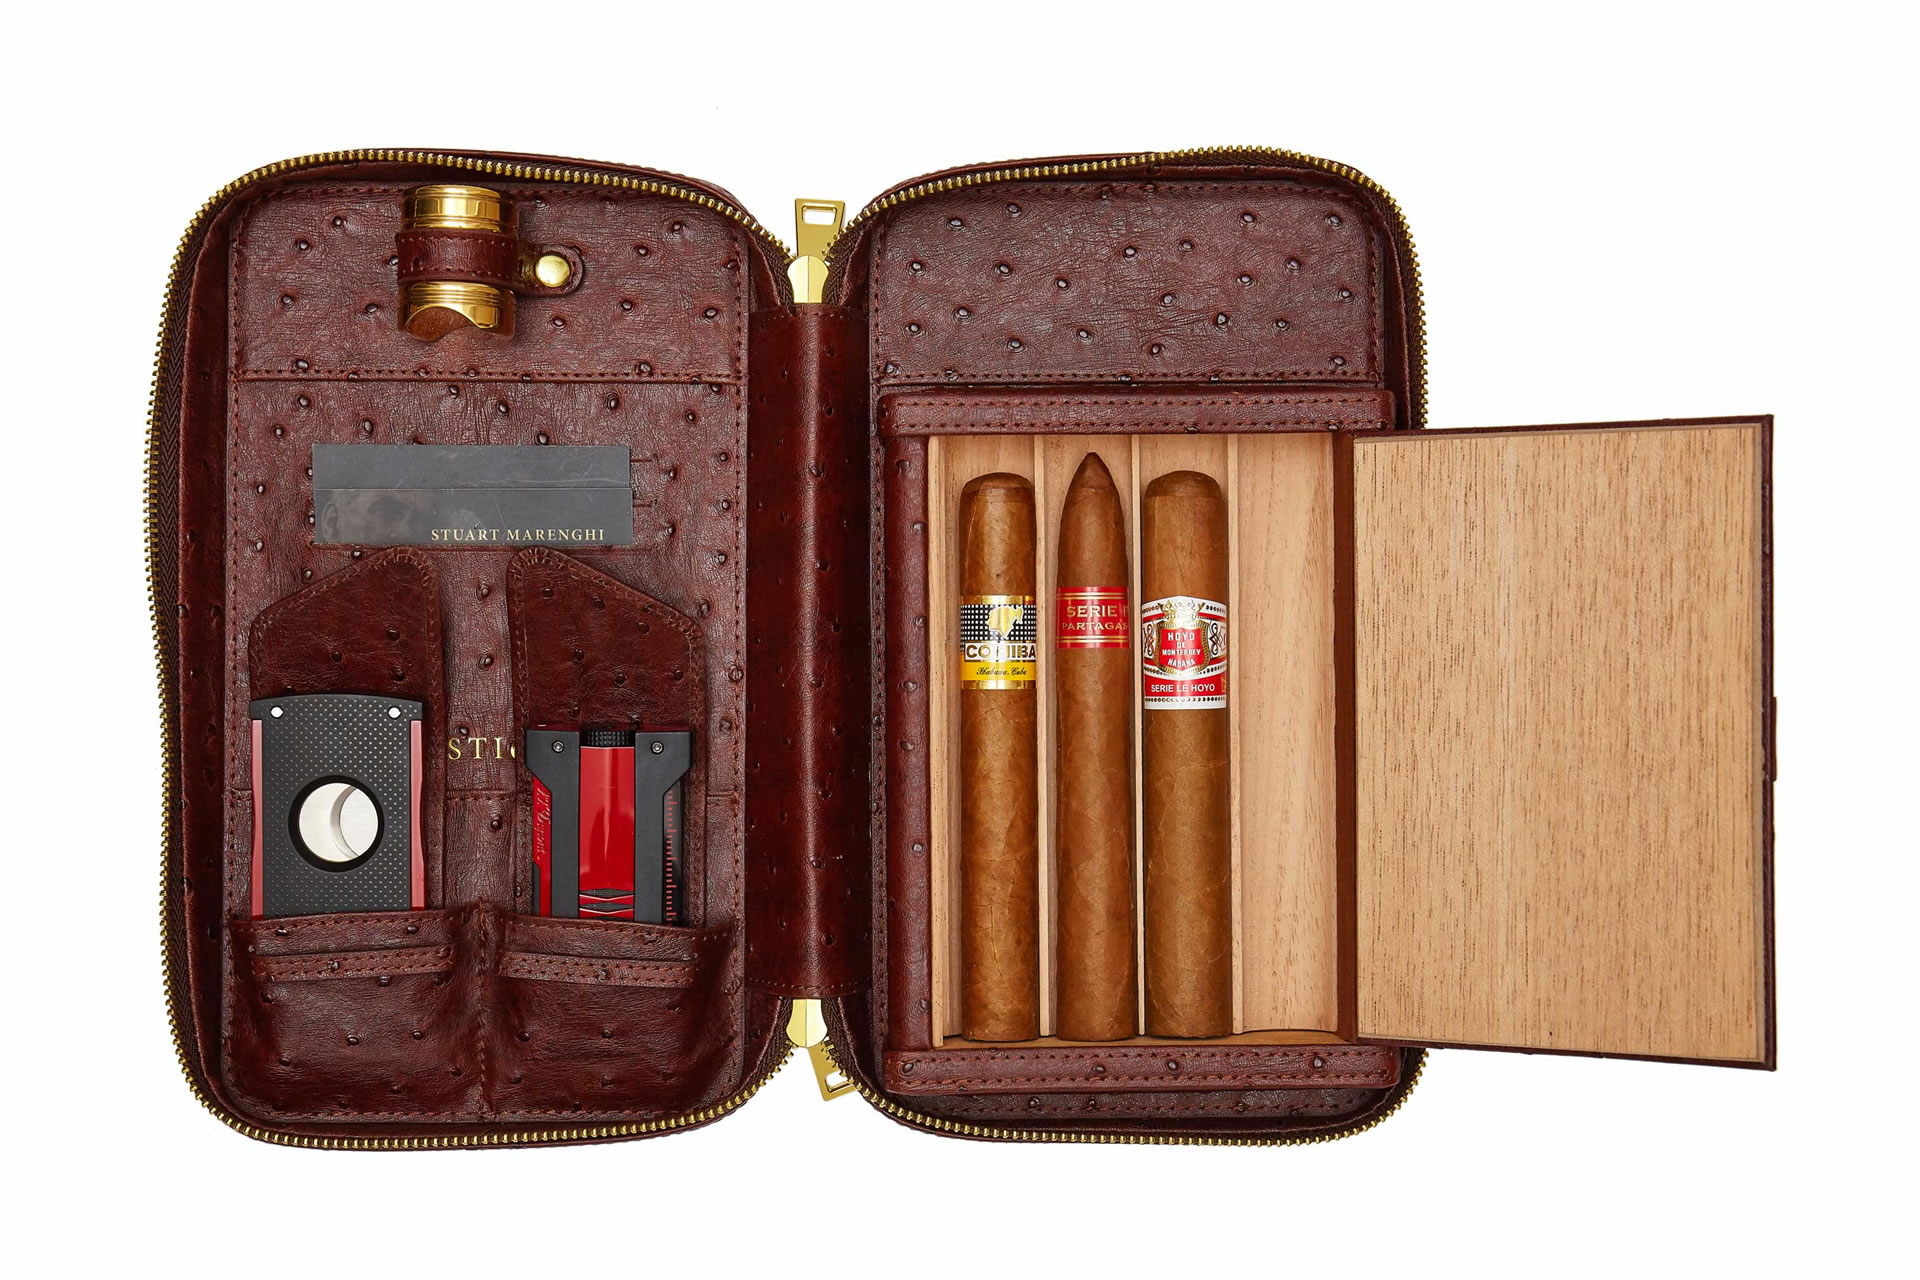 soft leather cigar travel case